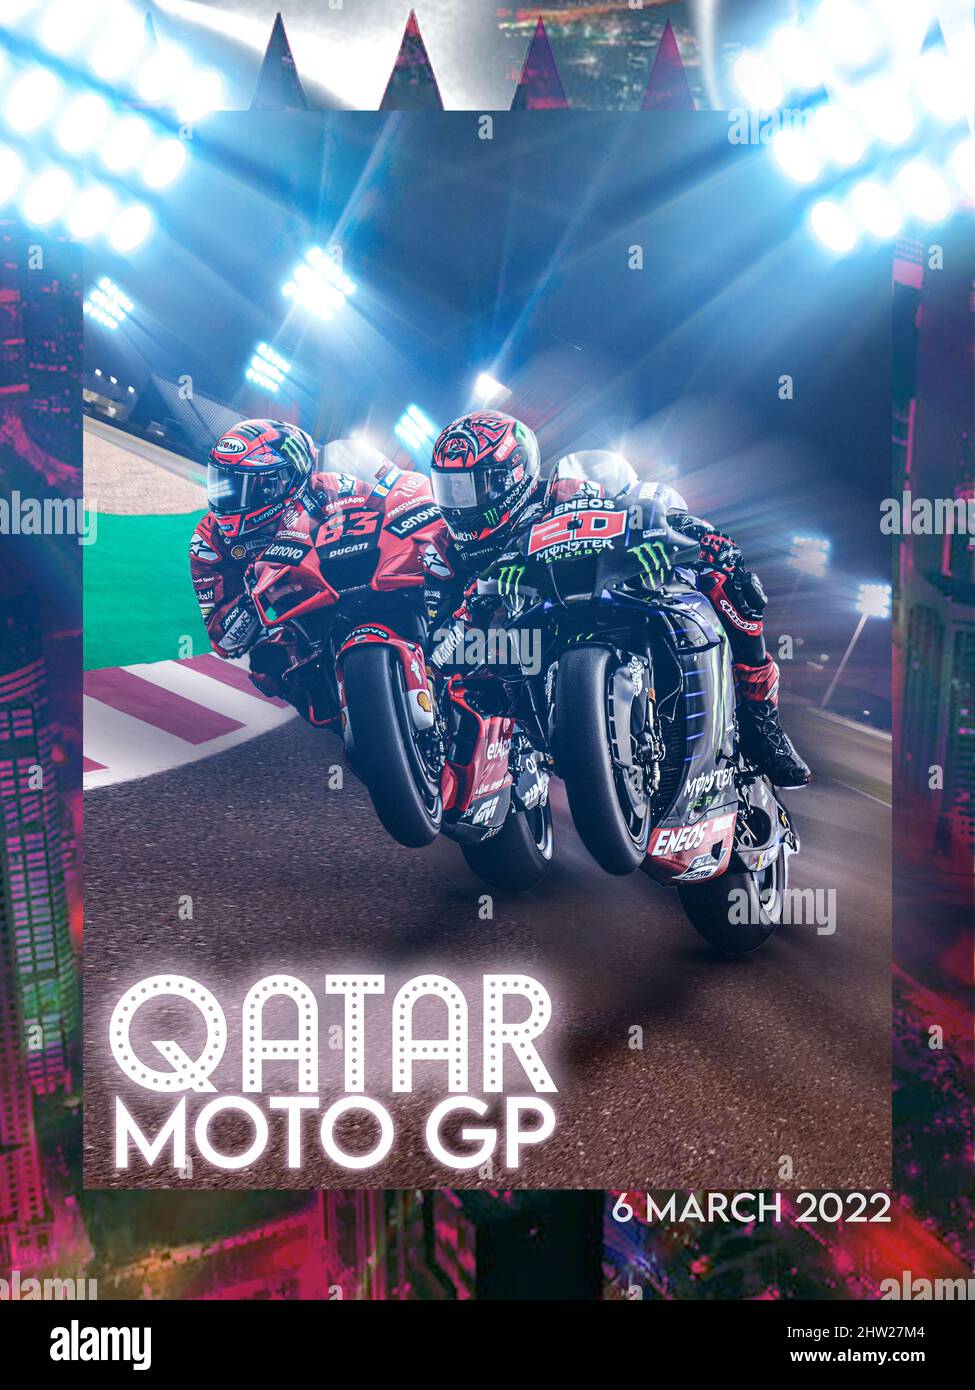 Qatar Moto Grand Prix 2022 Race Poster Stock Photo - Alamy